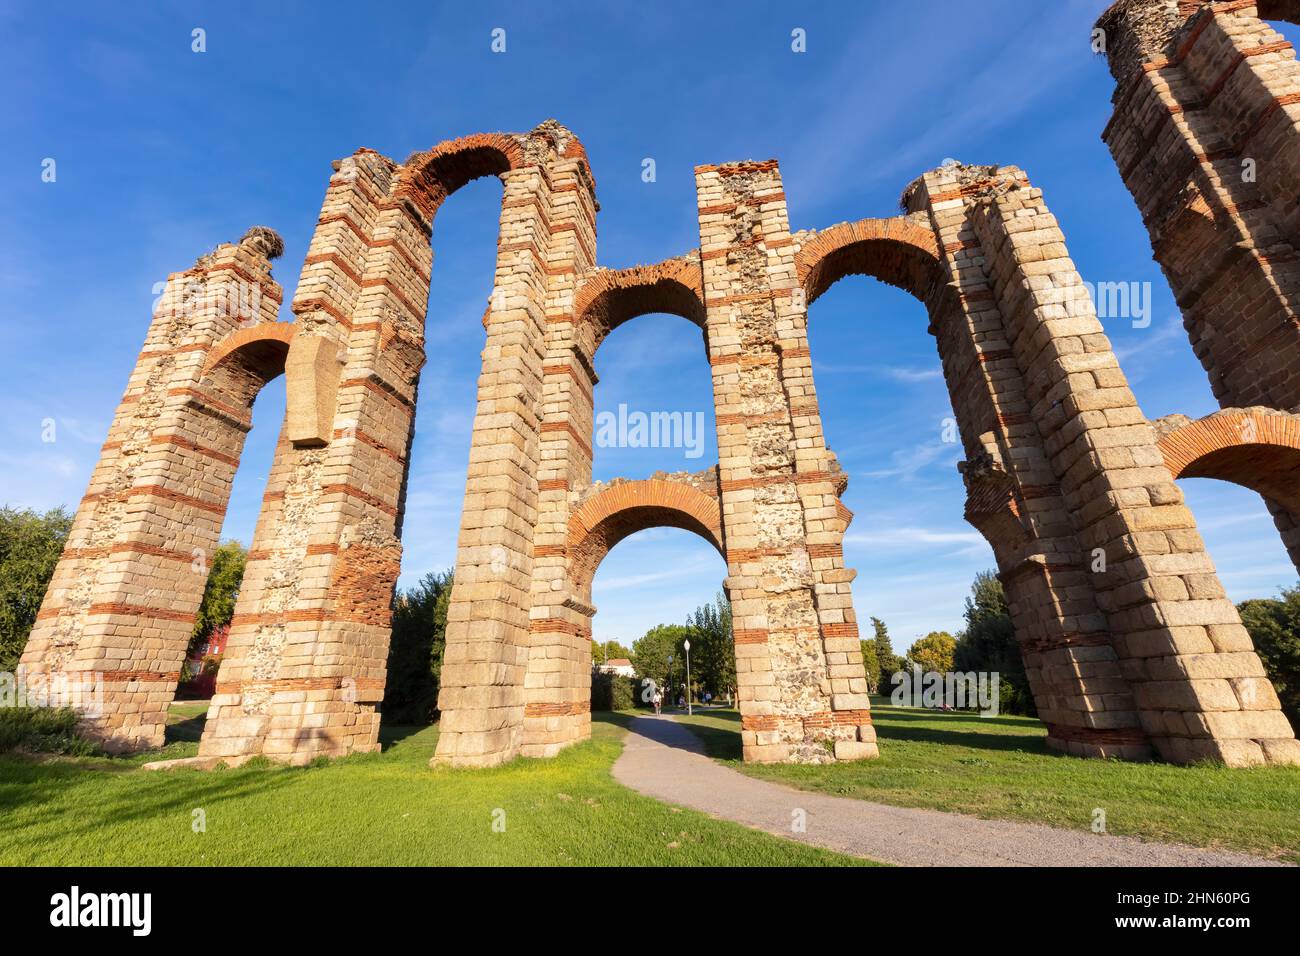 L'Acueducto de los Milagros est les ruines d'un pont d'aqueduc romain dans la ville de Merida, en Espagne Banque D'Images